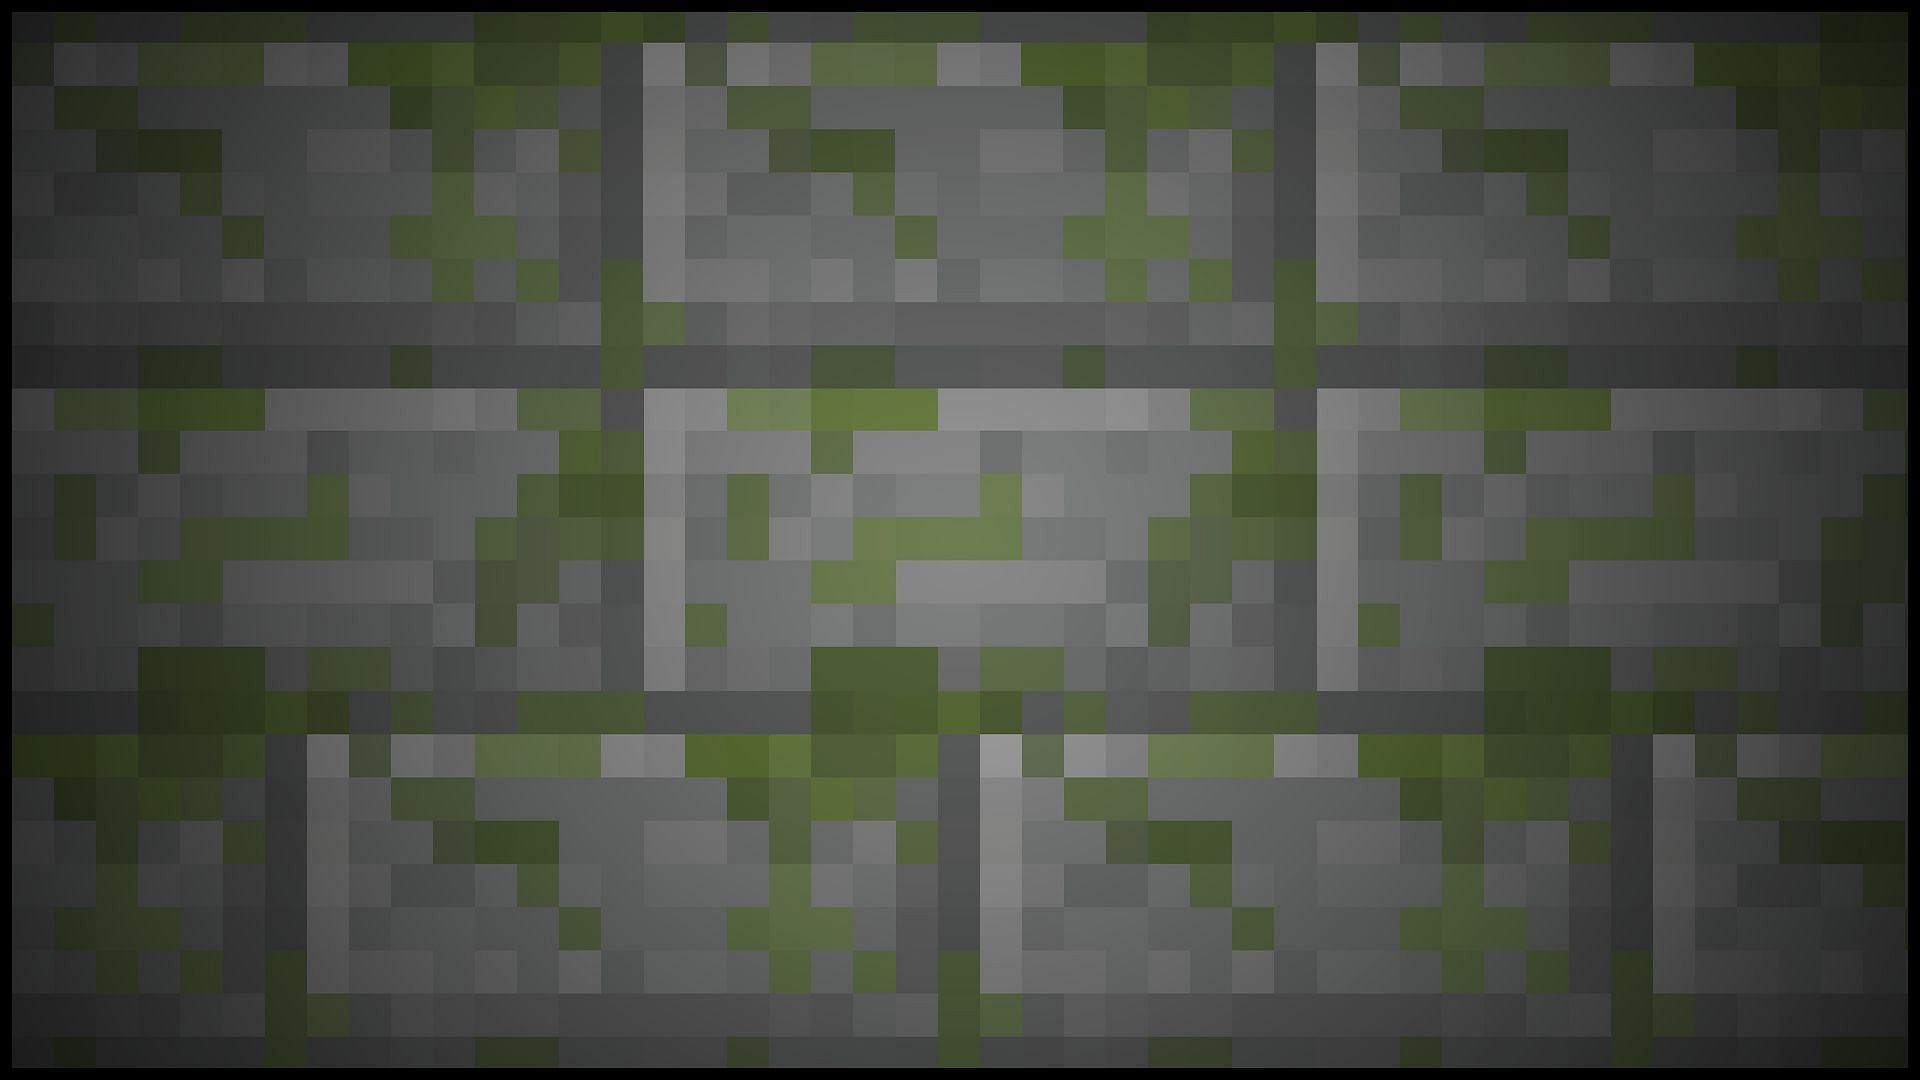 Mossy stone bricks in Minecraft (Image via Minecraft)